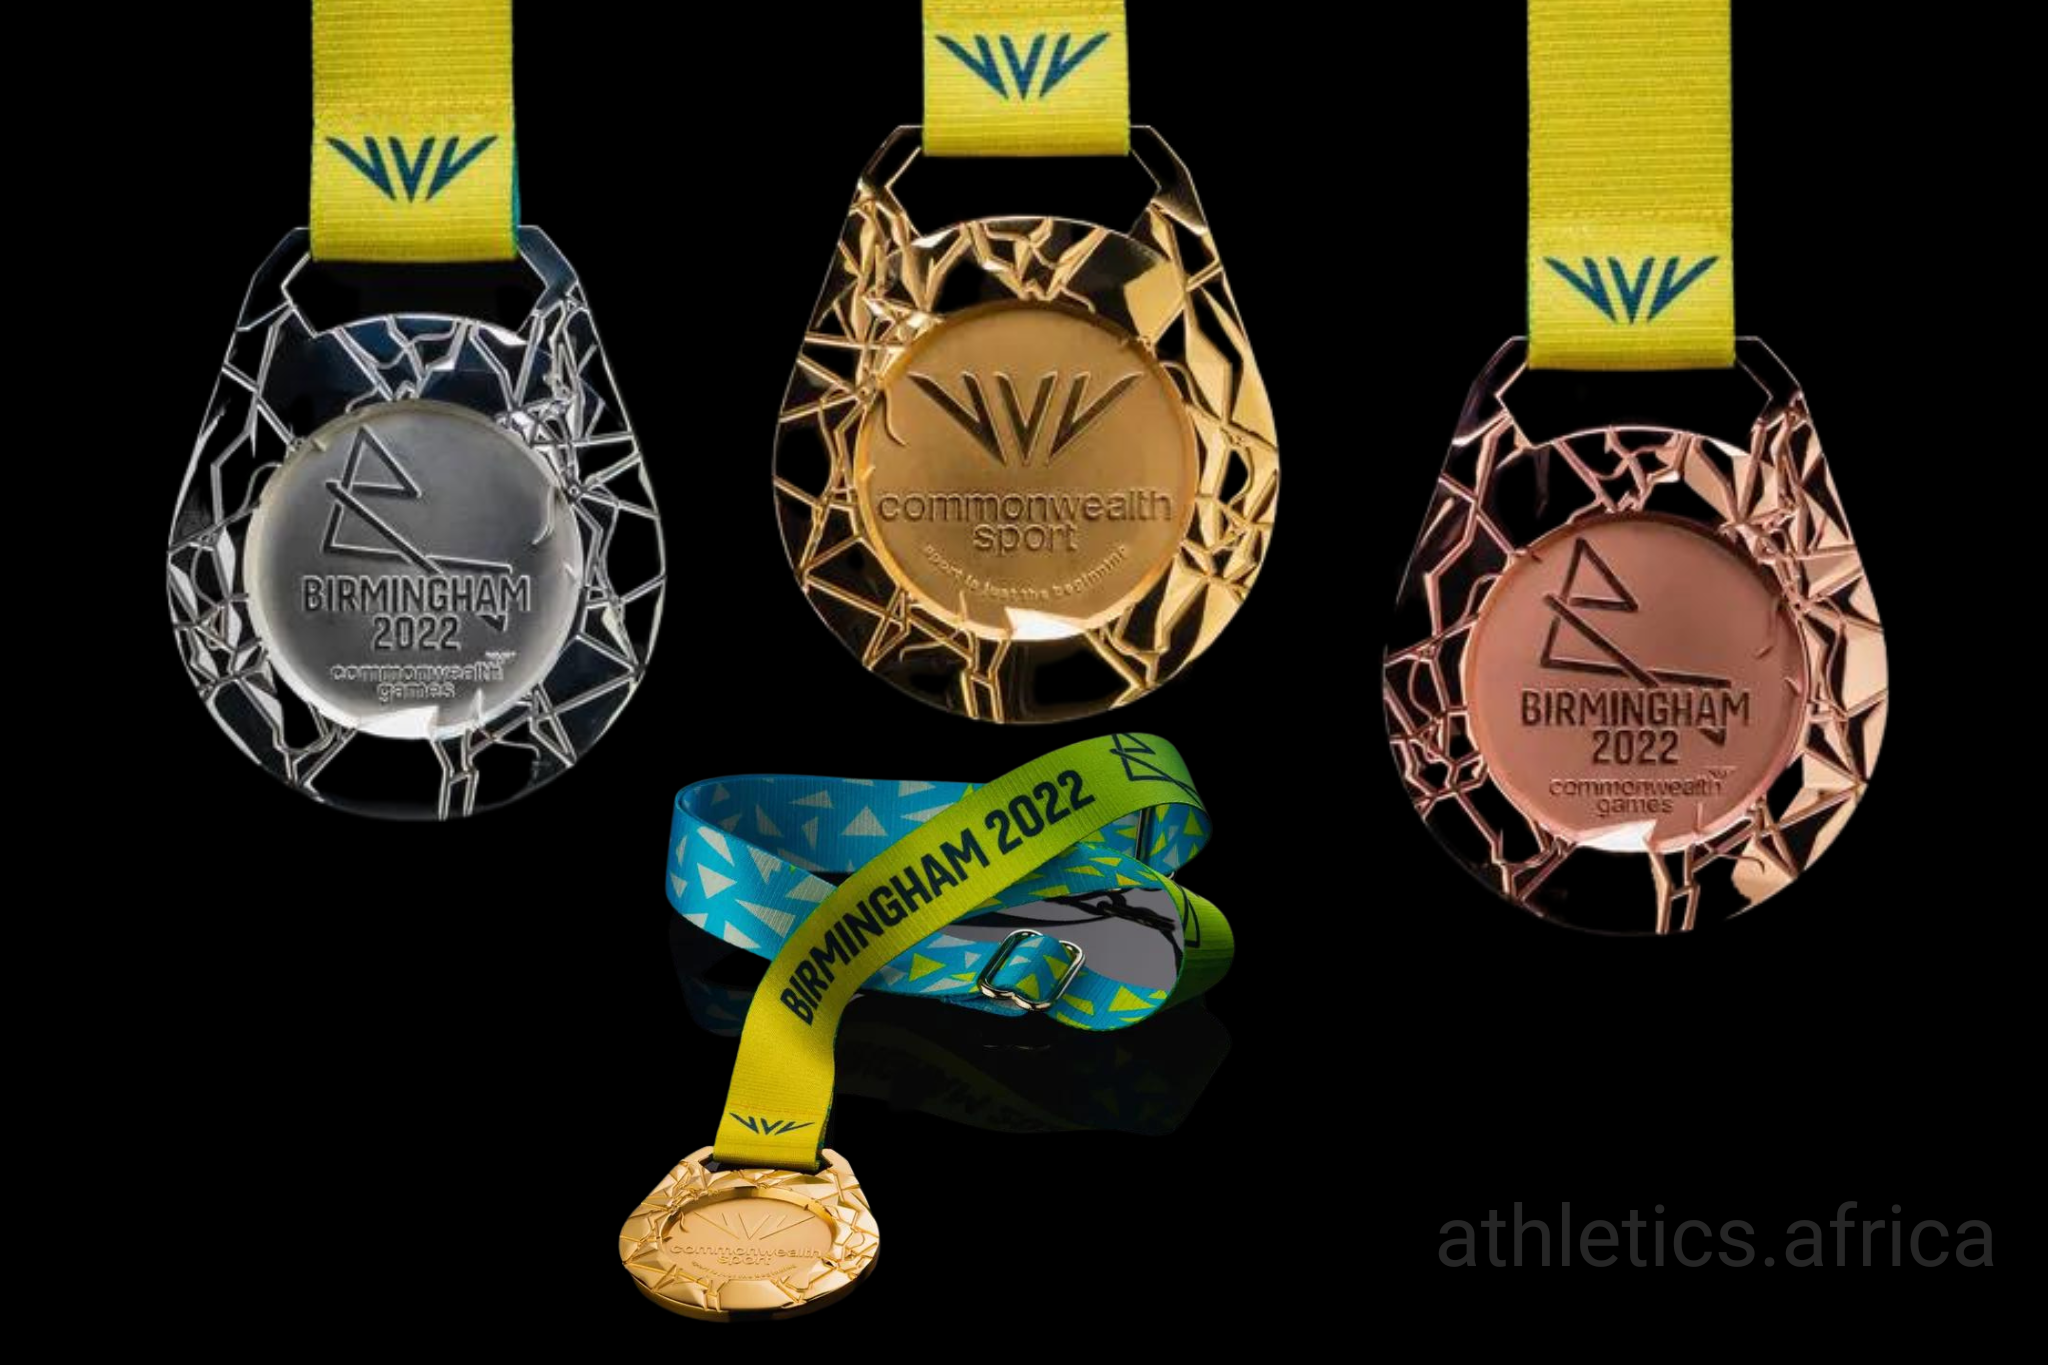 Birmingham-2022-Commonwealth-Games-medals